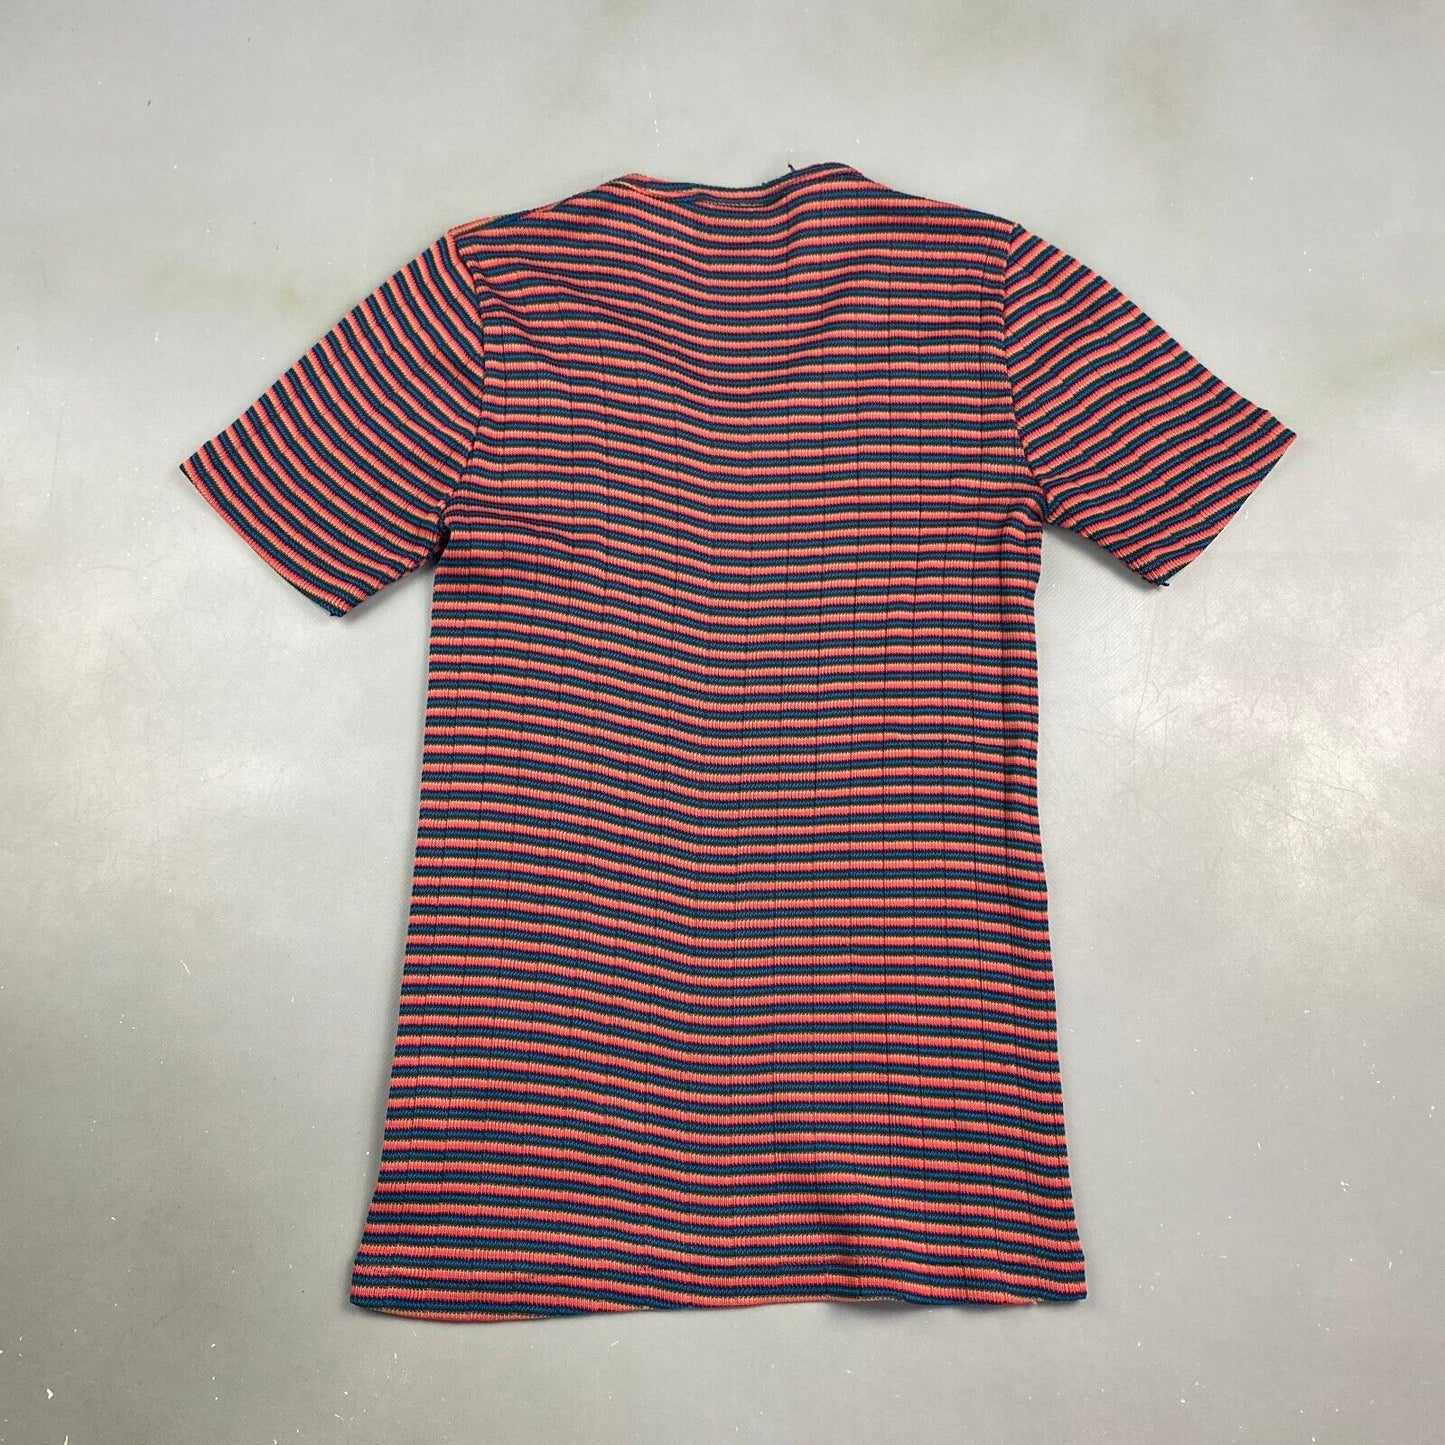 VINTAGE 90s Striped Stretch Blank T-Shirt sz XS Adult